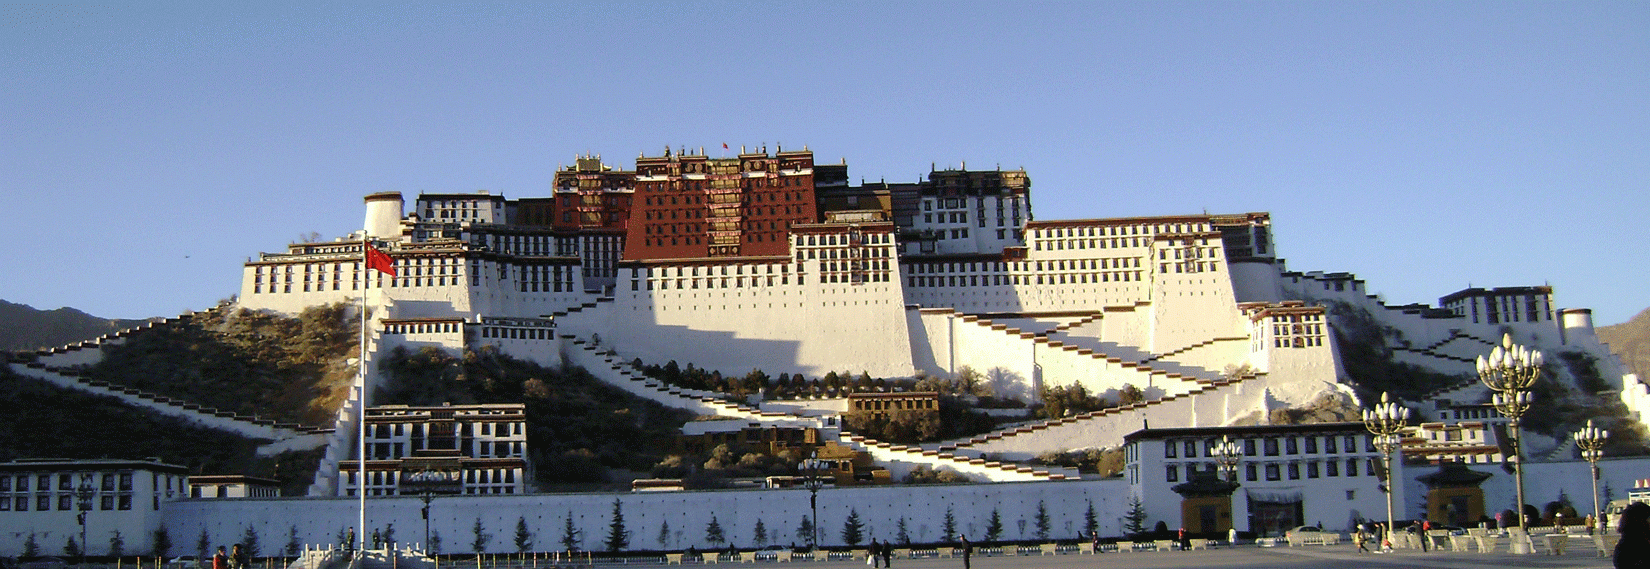 Potala Palace in Tibet 